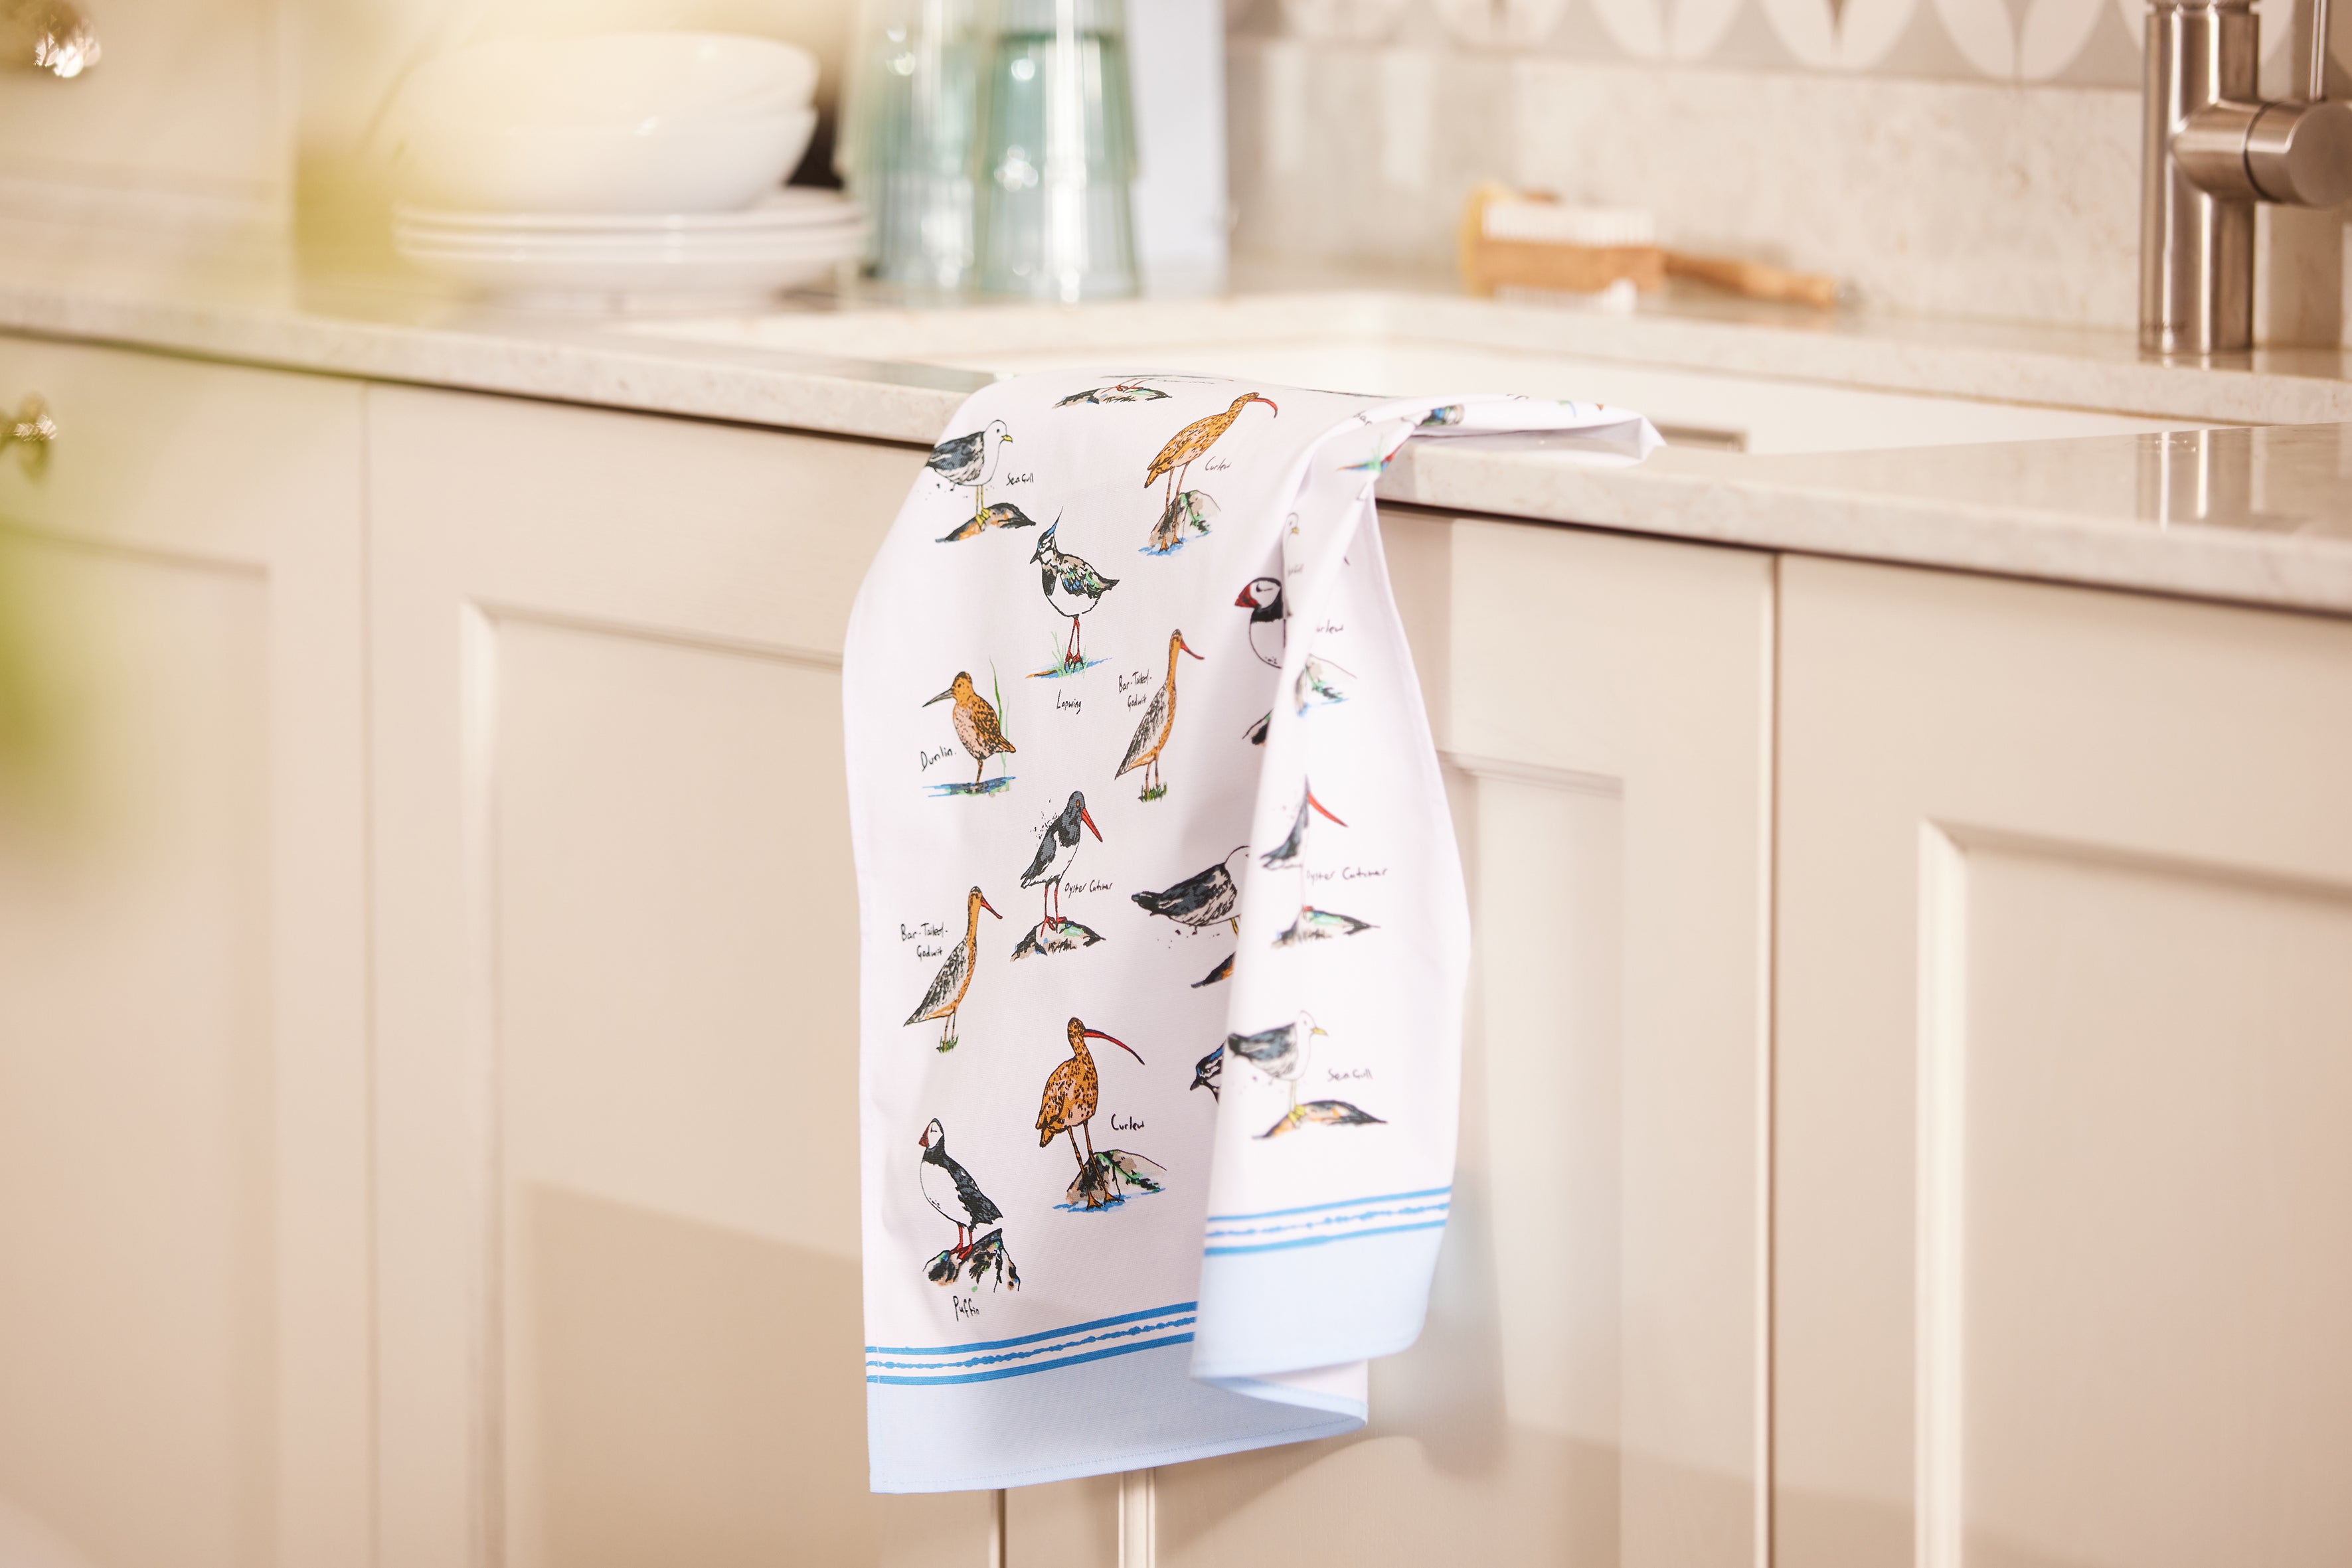 Ulster Weavers, "Coastal Birds", Printed cotton tea towel.